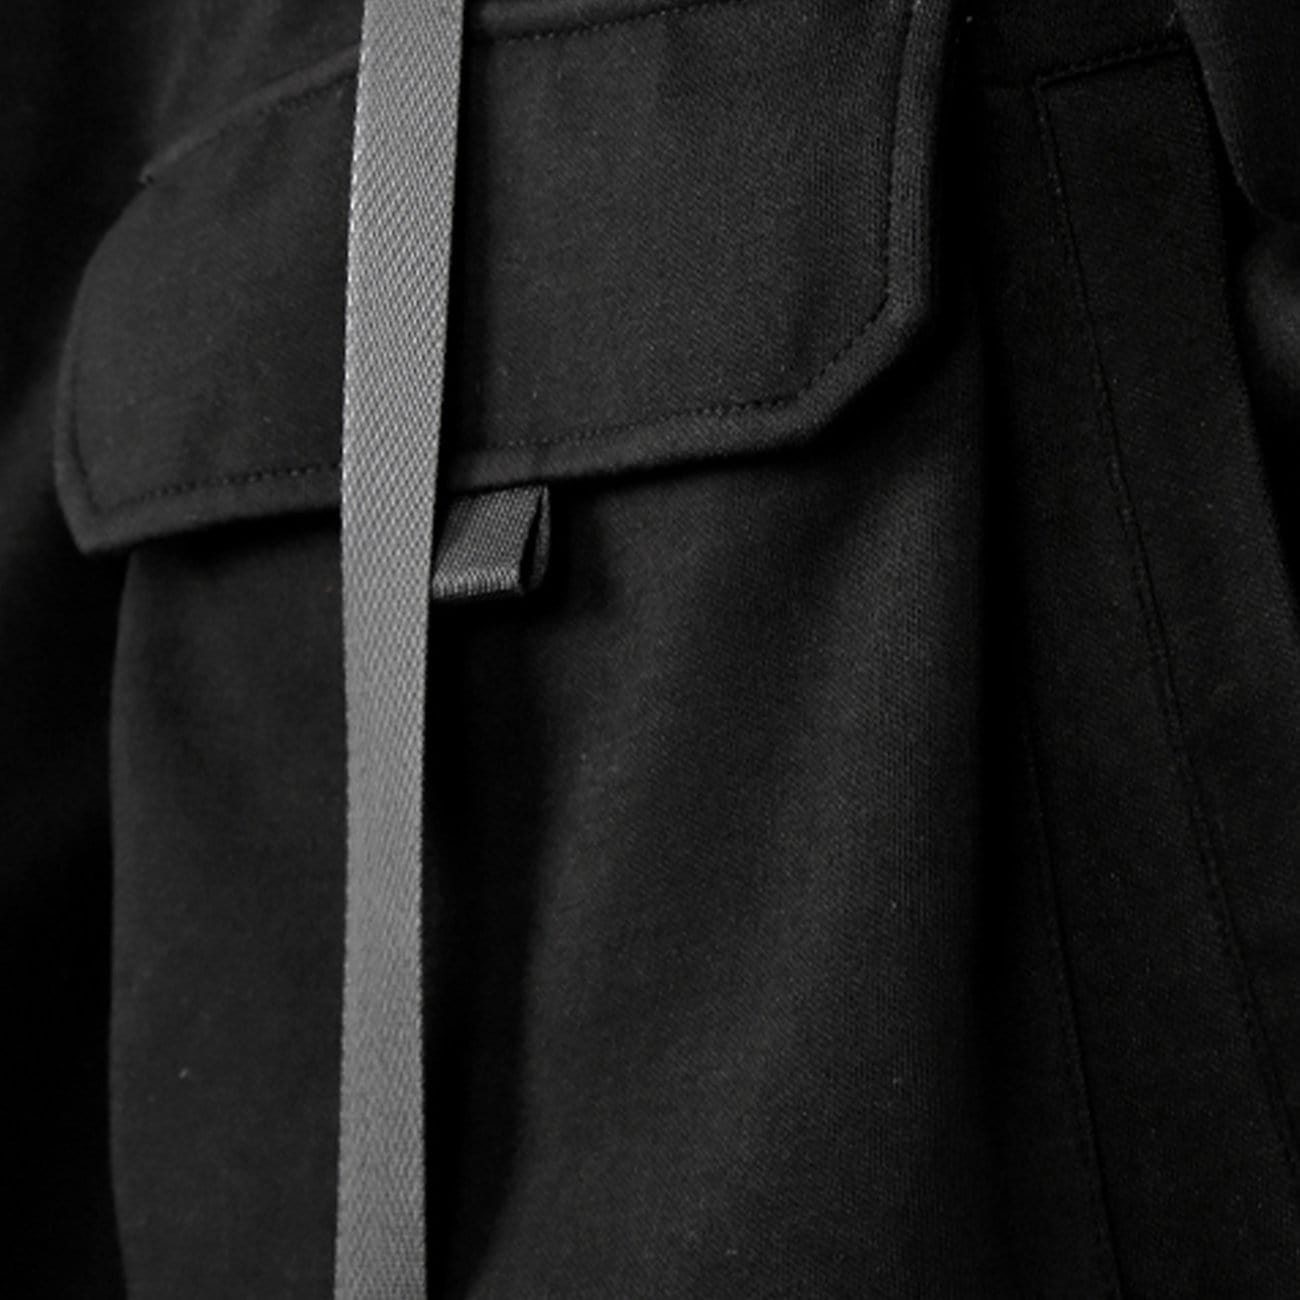 Ninja Ribbons Multi Pockets Function Jacket Streetwear Brand Techwear Combat Tactical YUGEN THEORY